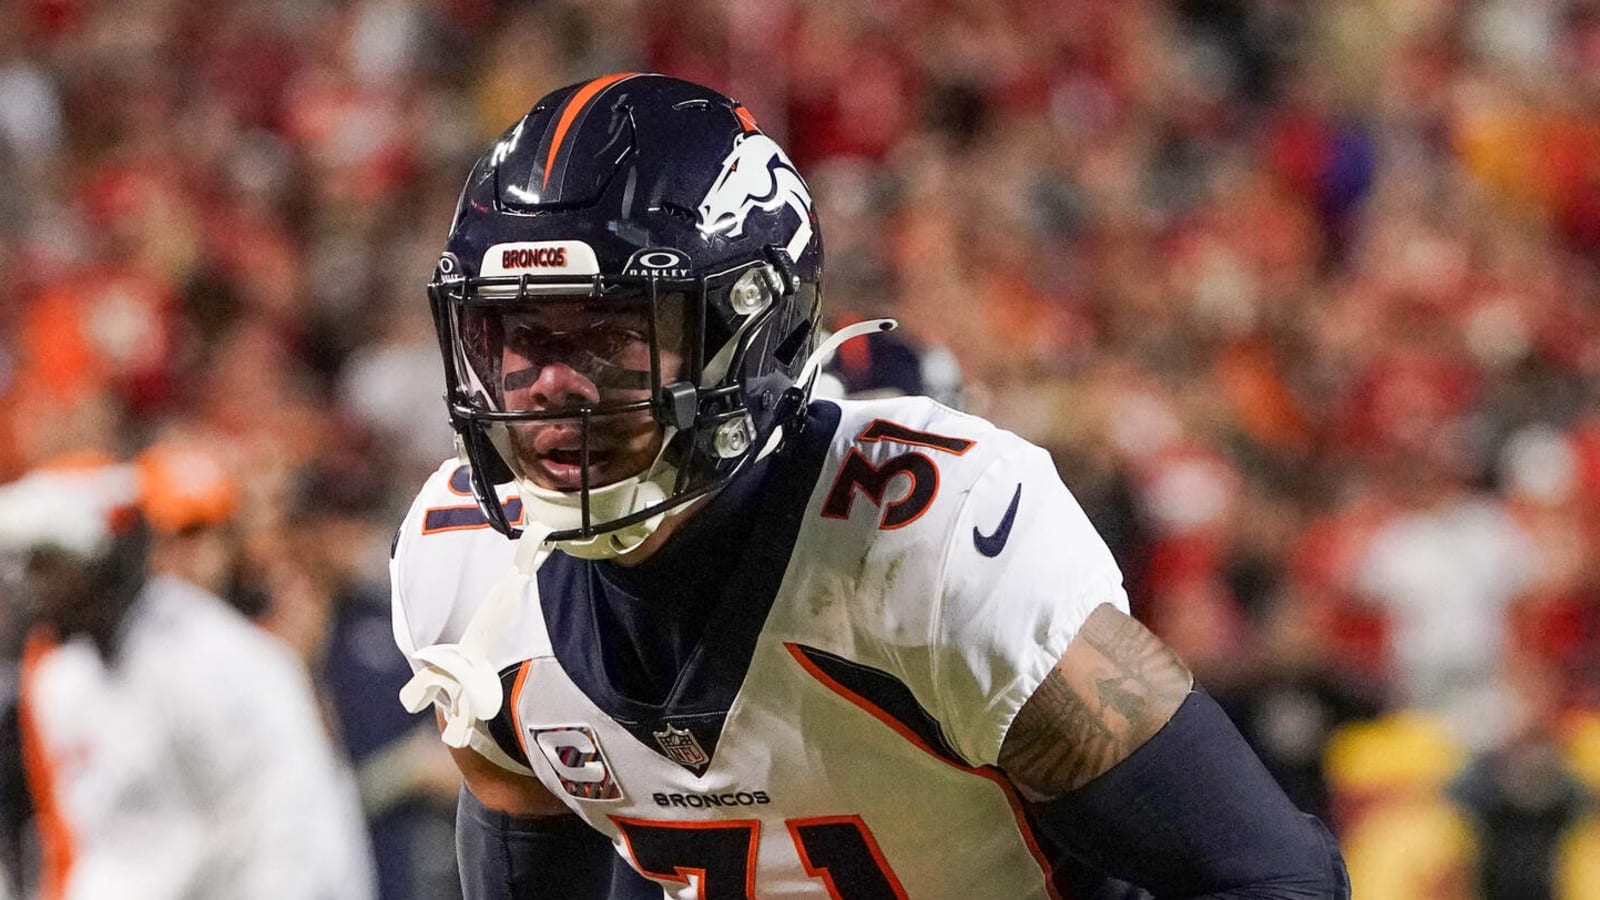 Broncos release Pro Bowl defensive player